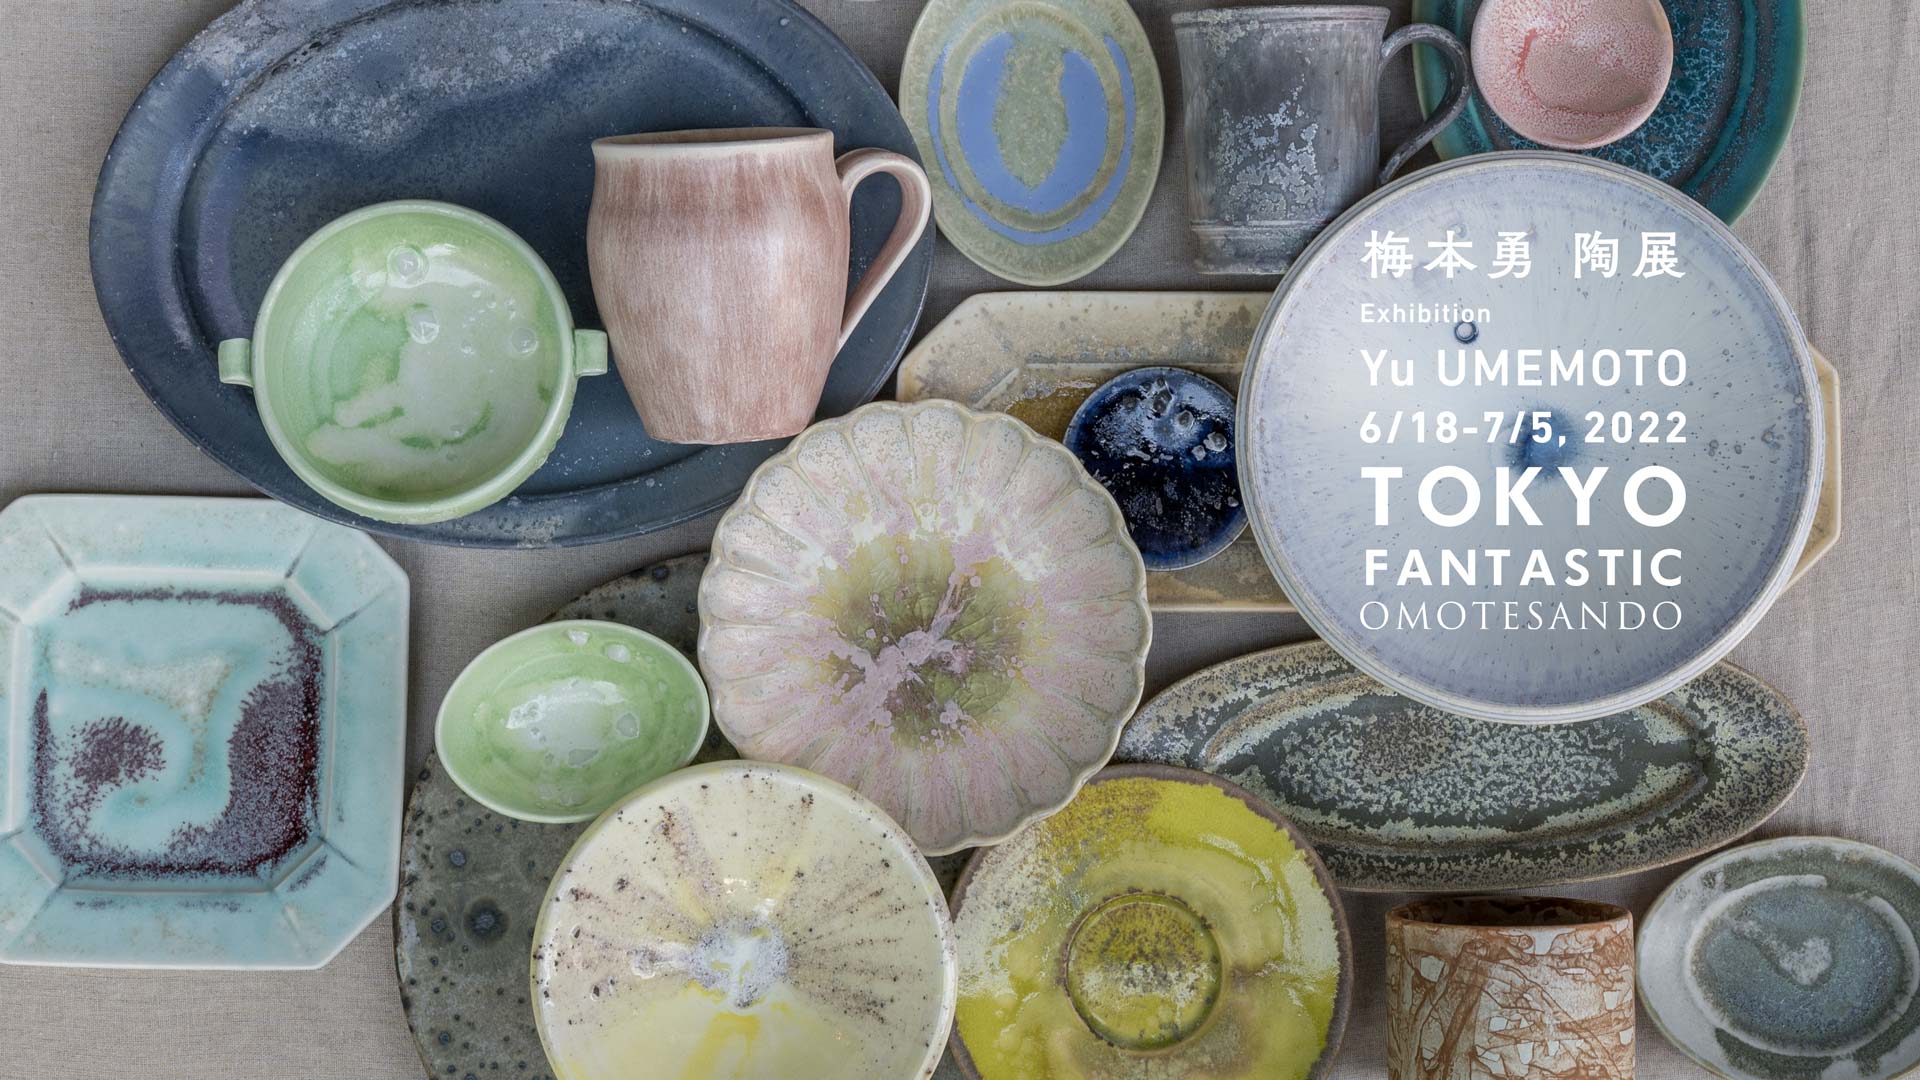 梅本勇 陶展 Exhibition Yu UMEMOTO 6/18-7/5, 2022【表参道店】